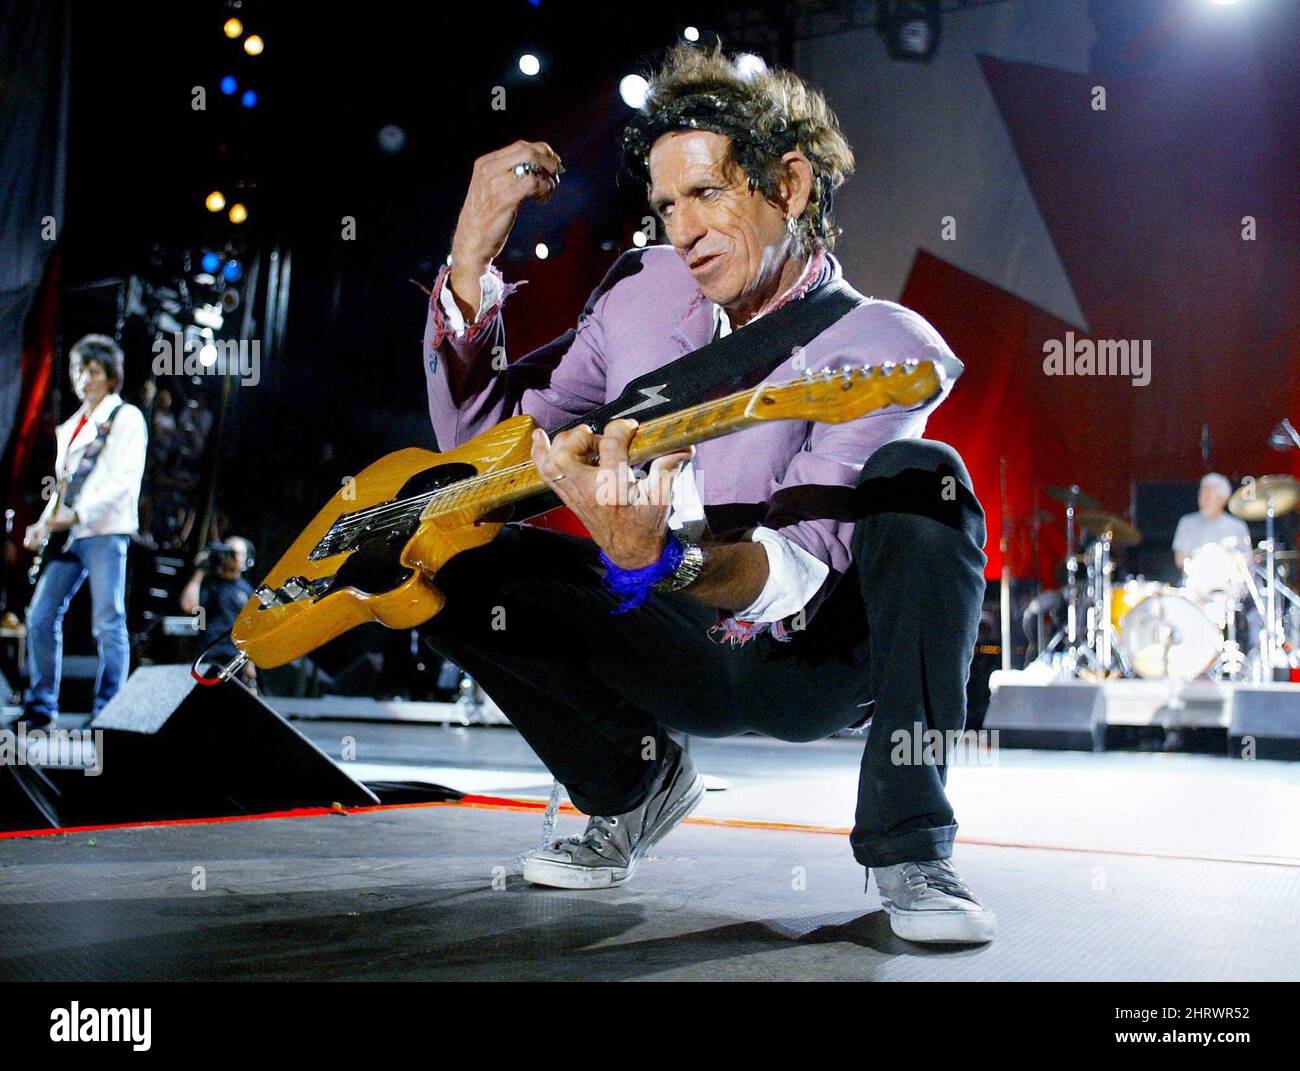 Rolling com. Rolling Stones кит Ричардс. Мик Джаггер и кит Ричардс. Кит Ричардс сейчас. Rolling Stones Magazine Jude Law.